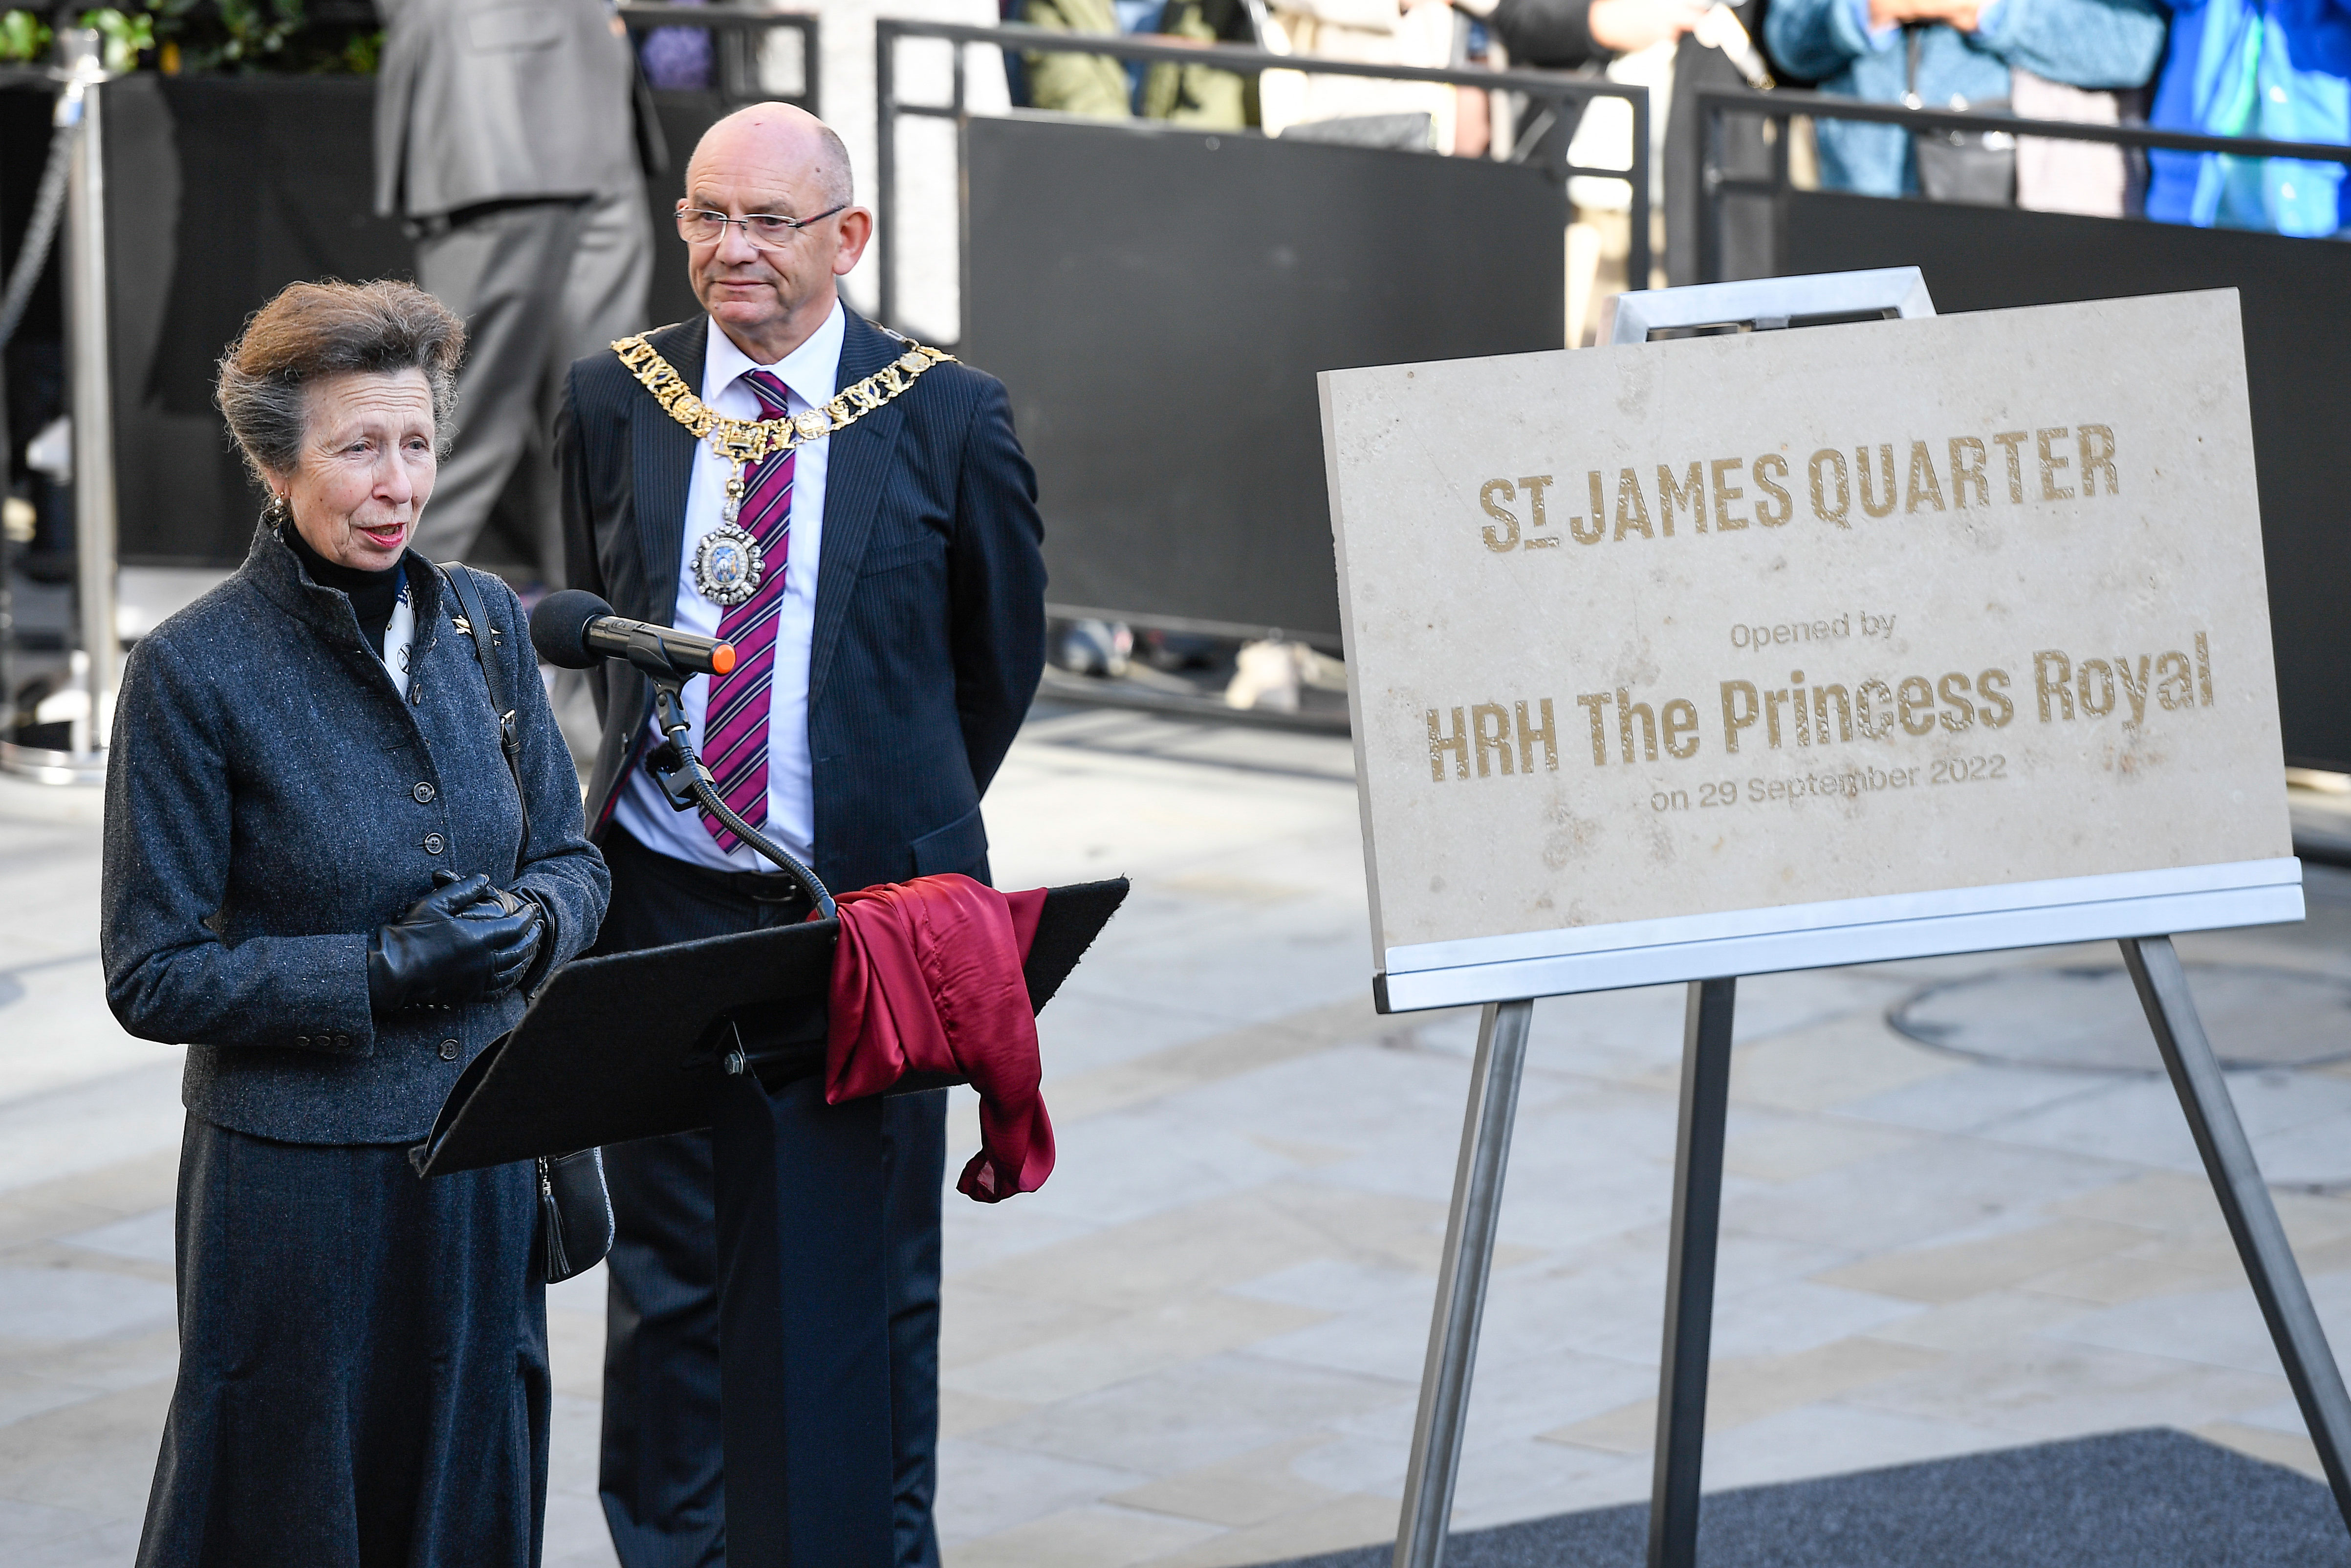 Her-Royal-Highness-The-Princess-Royal-unveils-foundation-stone-for-St-James-Quarter,-Edinburgh.jpg